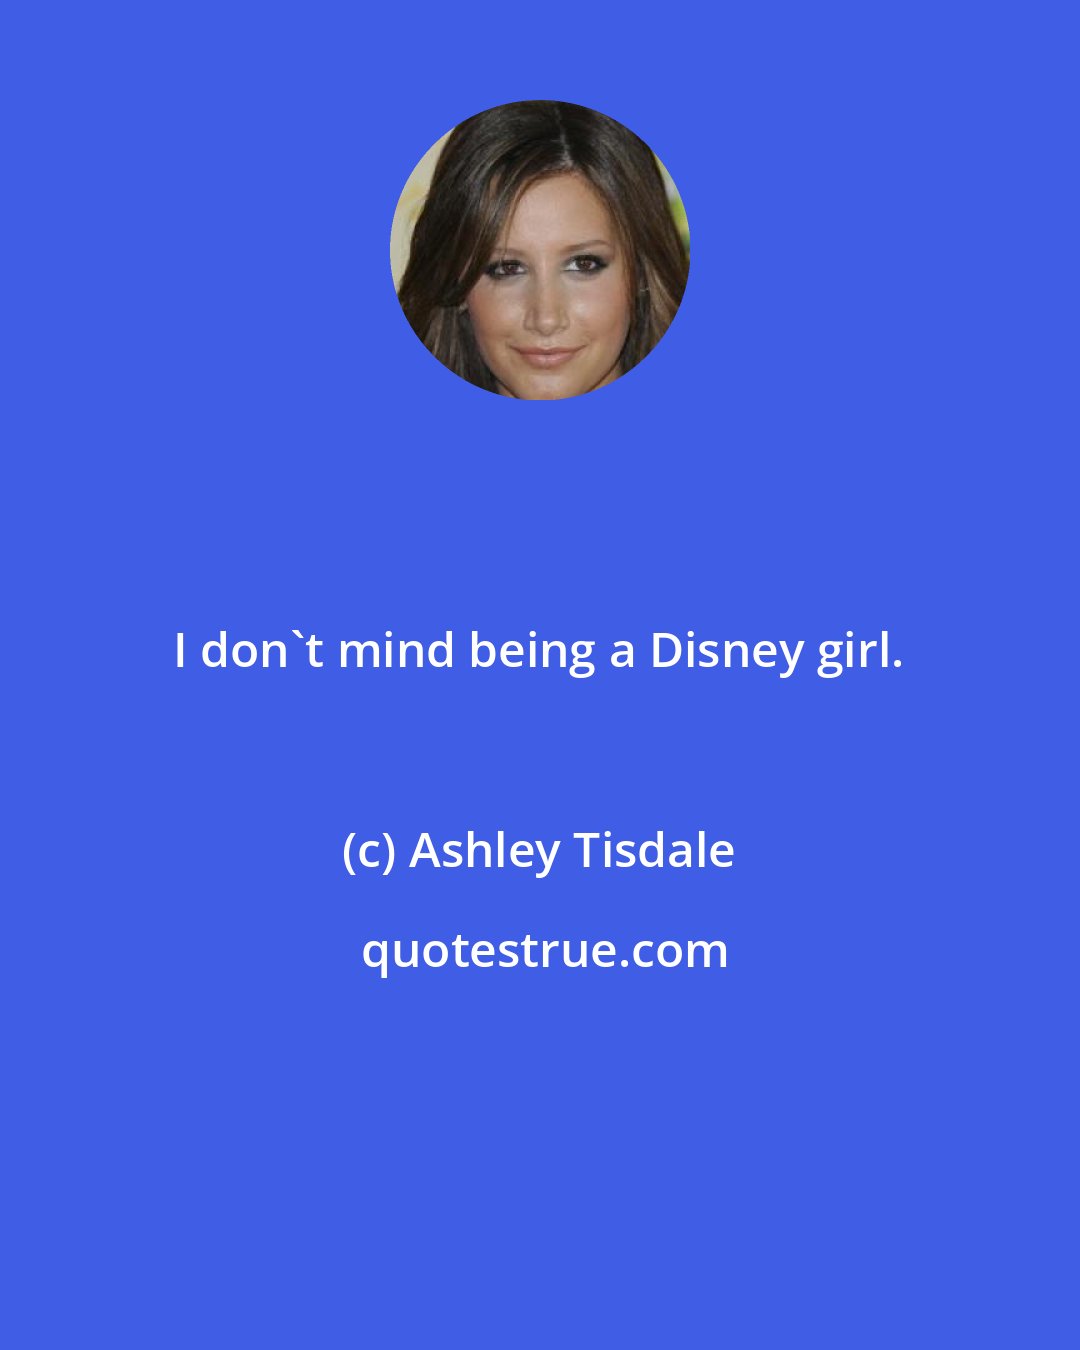 Ashley Tisdale: I don't mind being a Disney girl.